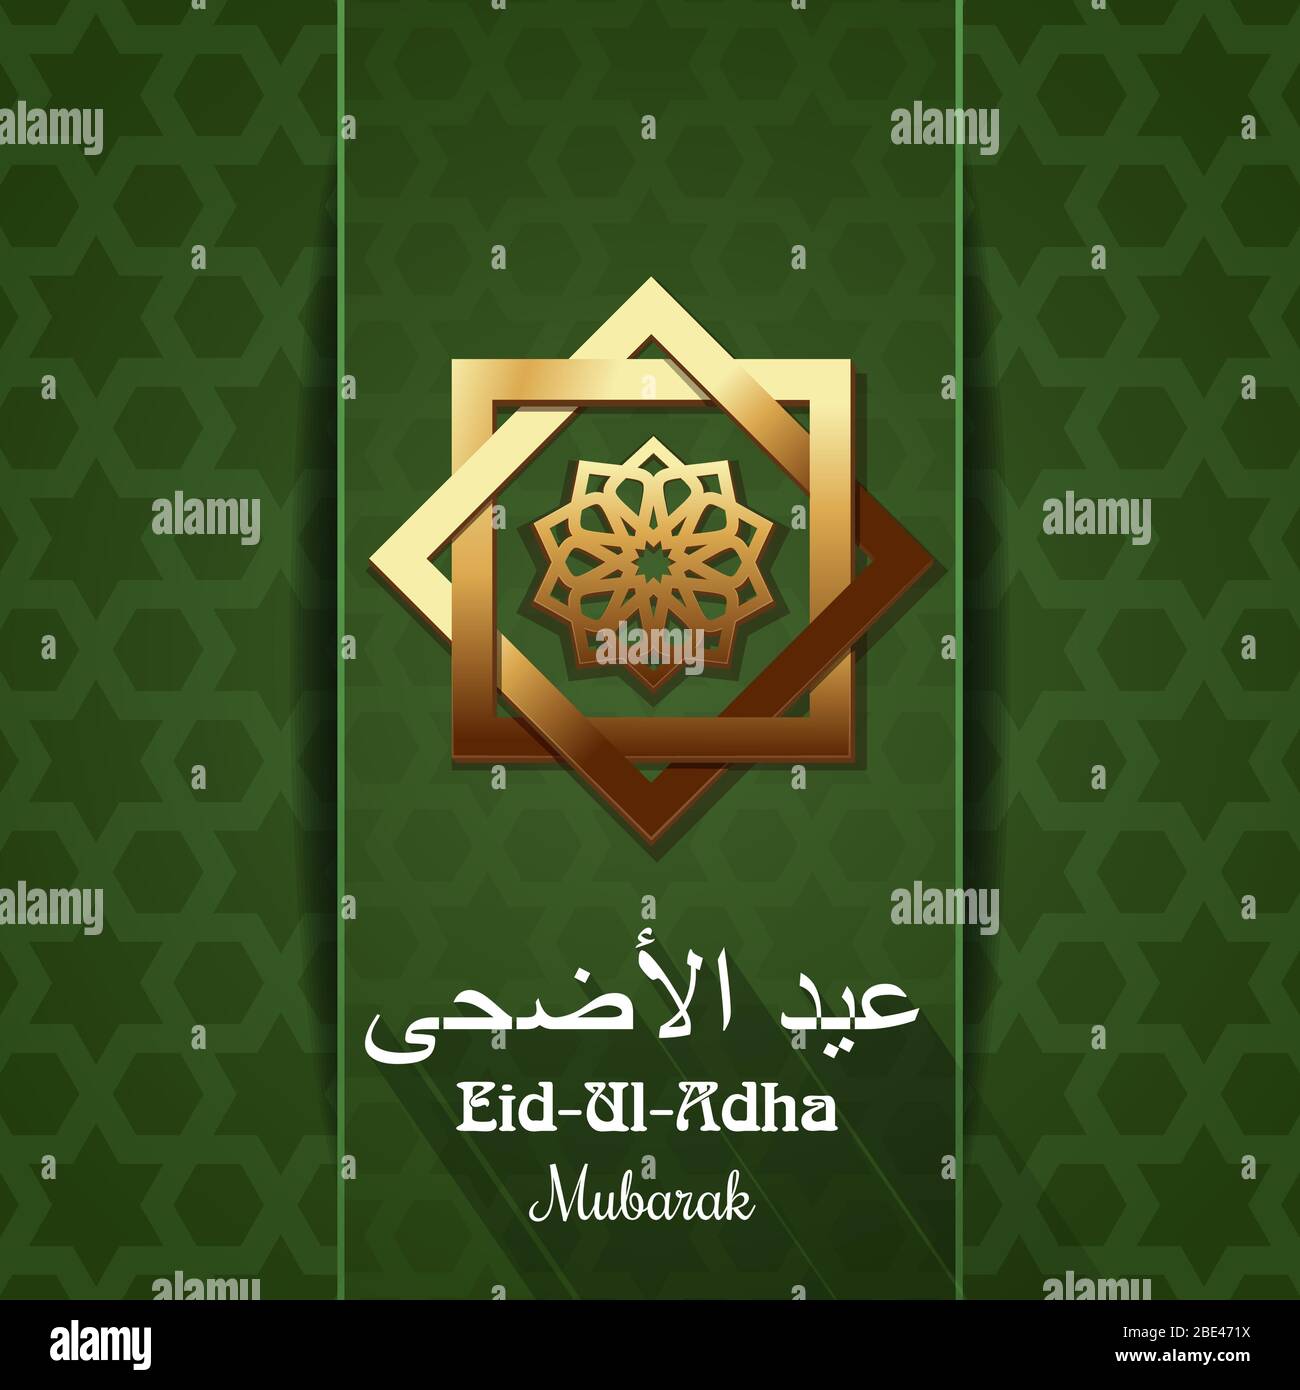 eid-ul-adha-stock-vector-images-alamy